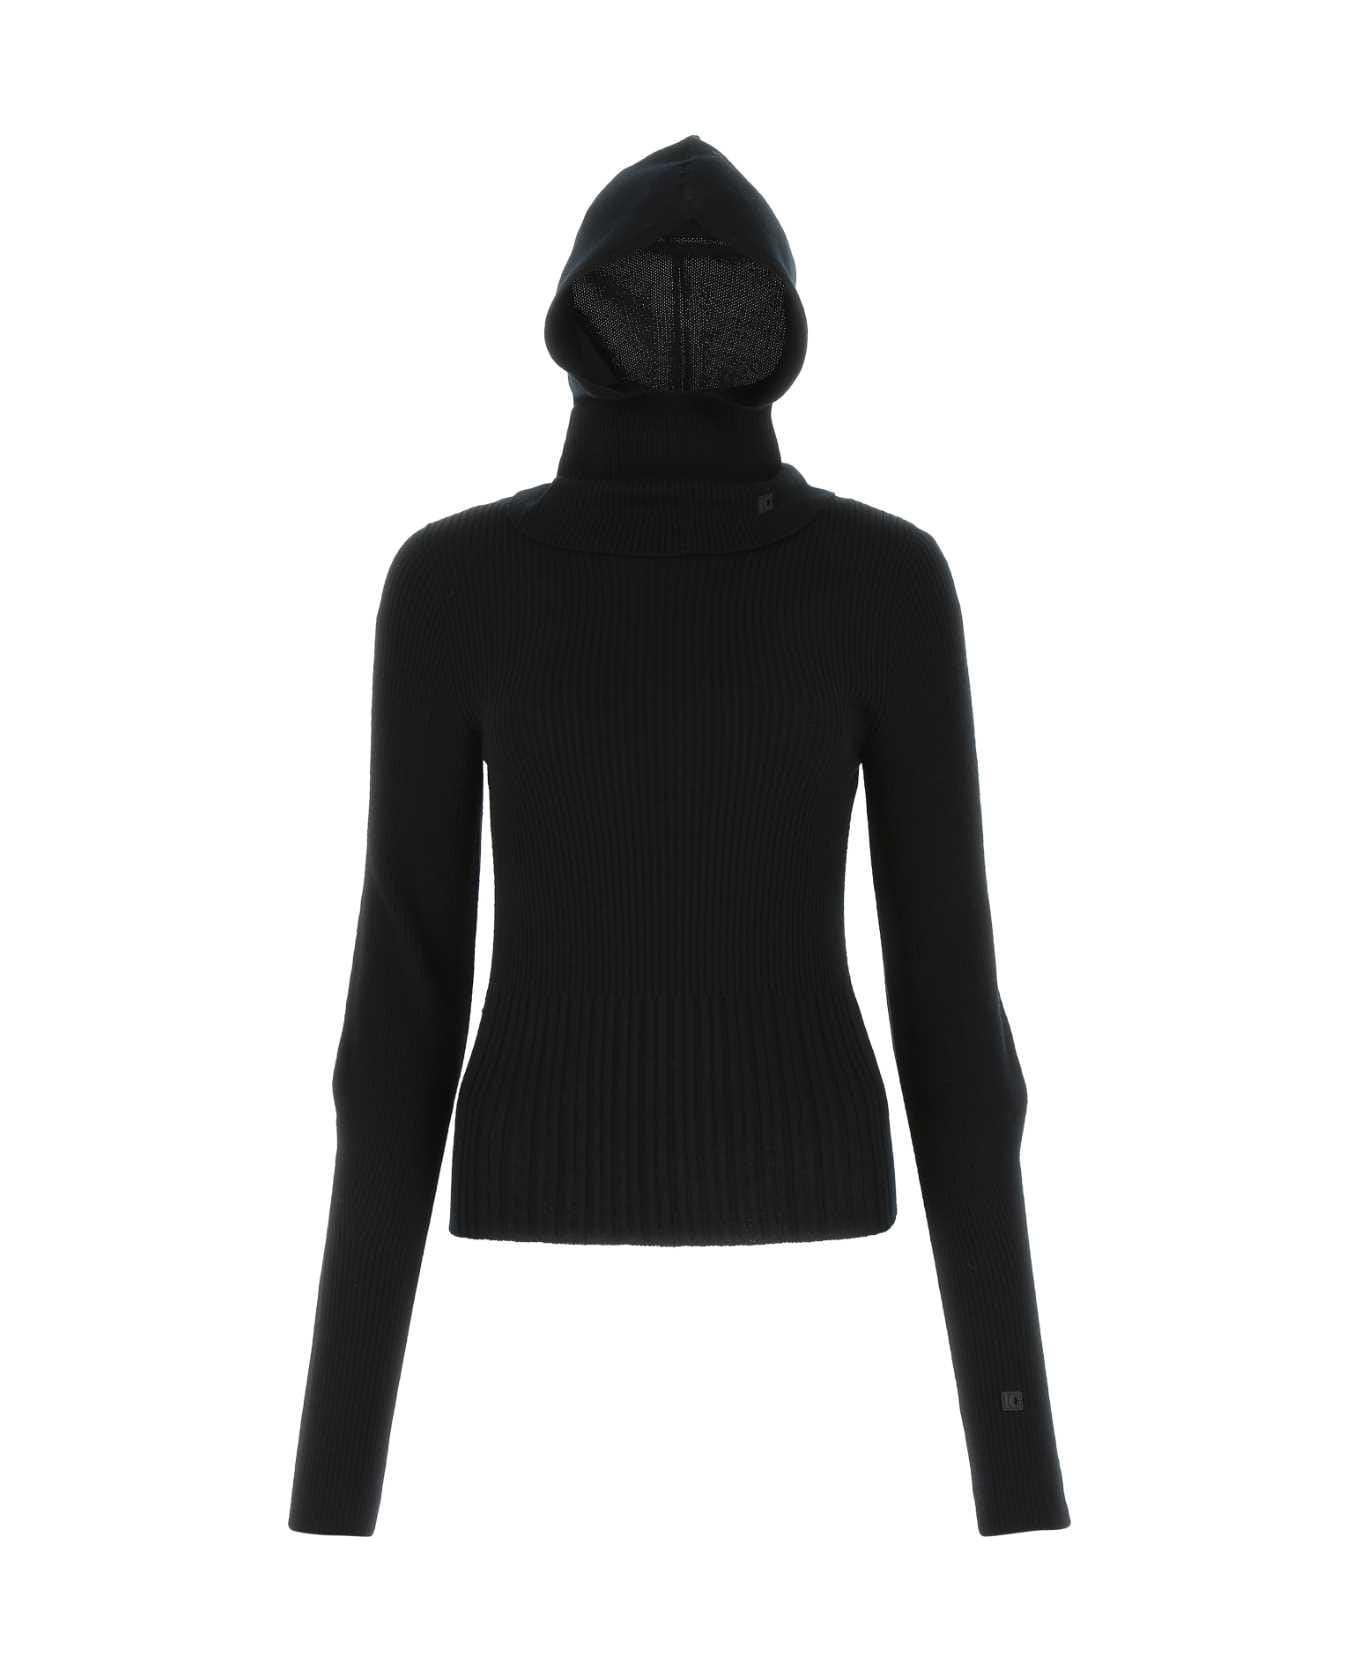 Low Classic Black Wool Sweater - 0372 ニットウェア